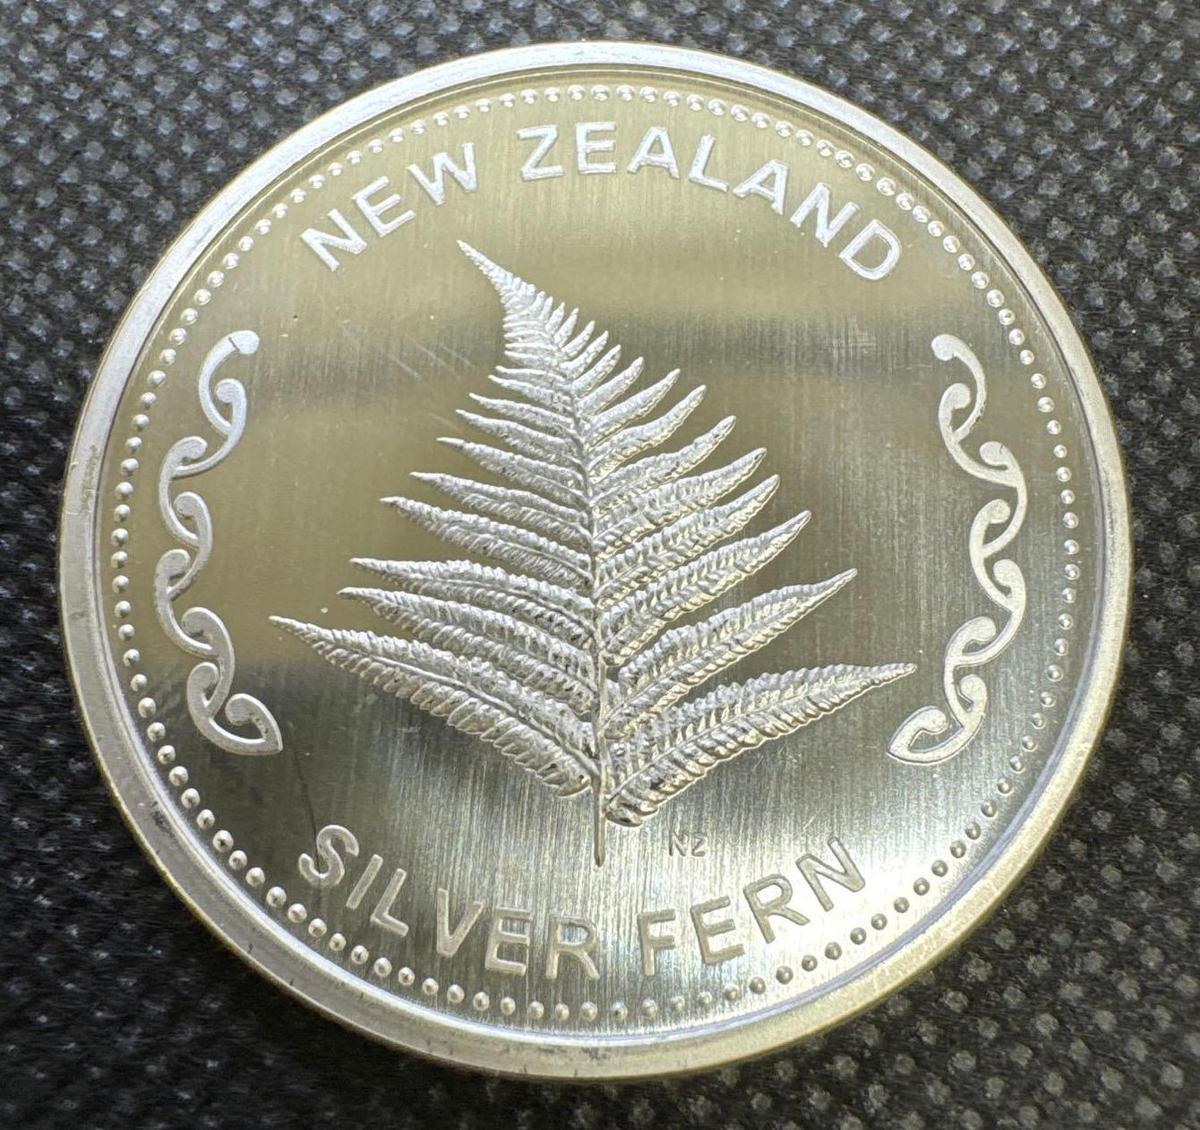 New Zealand 1 Troy Oz .999 Fine Silver Fern Round Bullion Coin